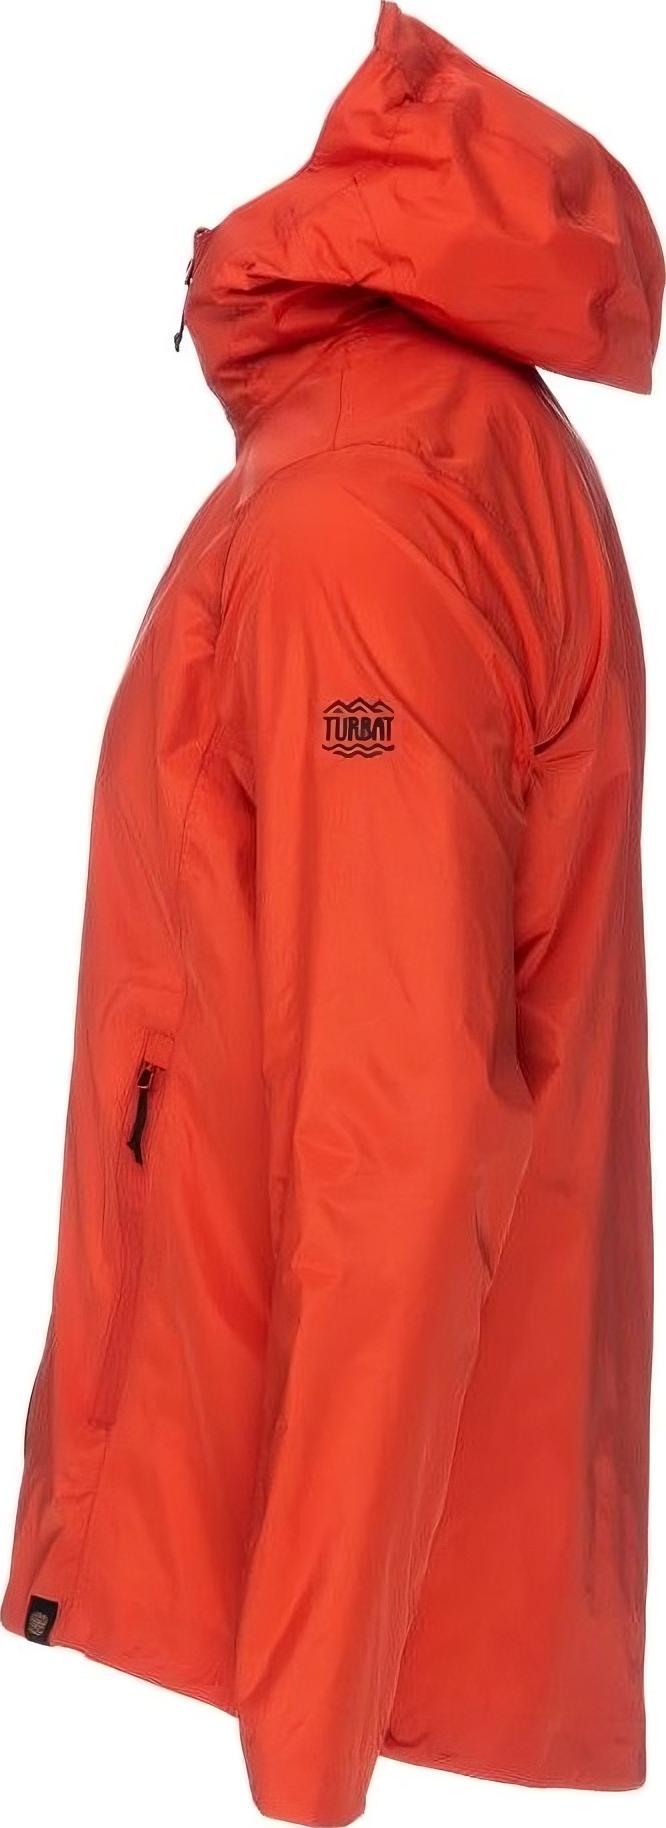 Куртка мужская Turbat Isla Mns orange red XL красный фото 2